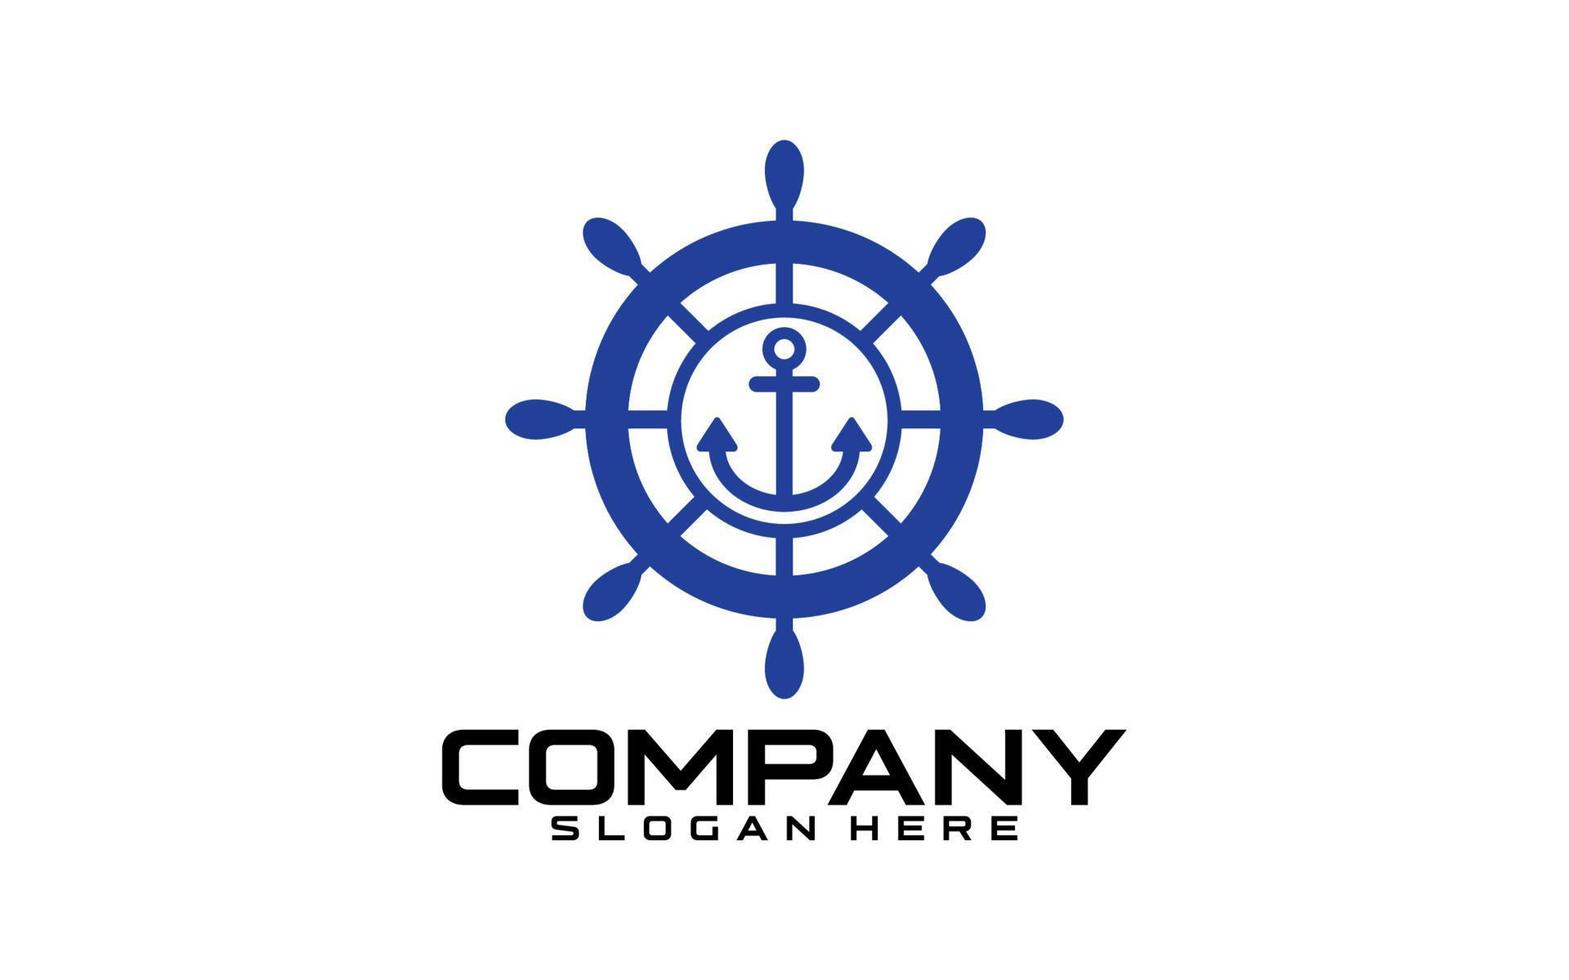 Marine retro emblems logo with anchor and ship steering, anchor logo vector